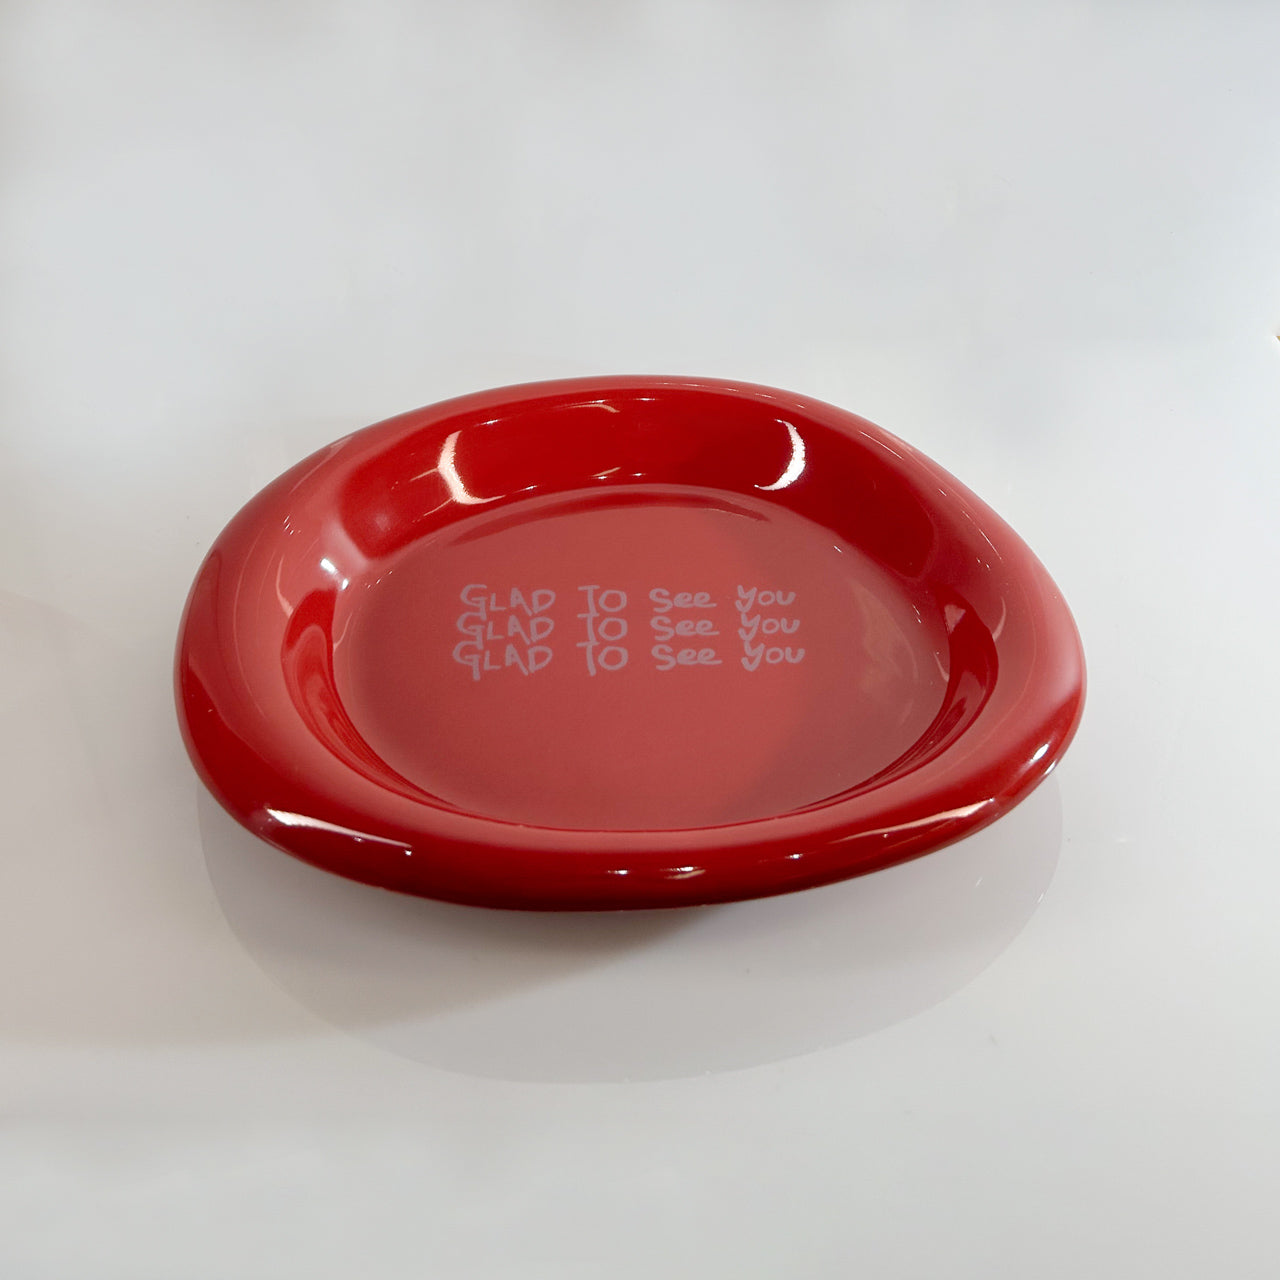 red 紅色 garome Art Gift Shop Hong Kong Souvenirs birthday celebration present gift ideas quote tabelware plates glasses 香港藝術禮品店 創意禮物 ins大熱餐具 語錄 玻璃杯